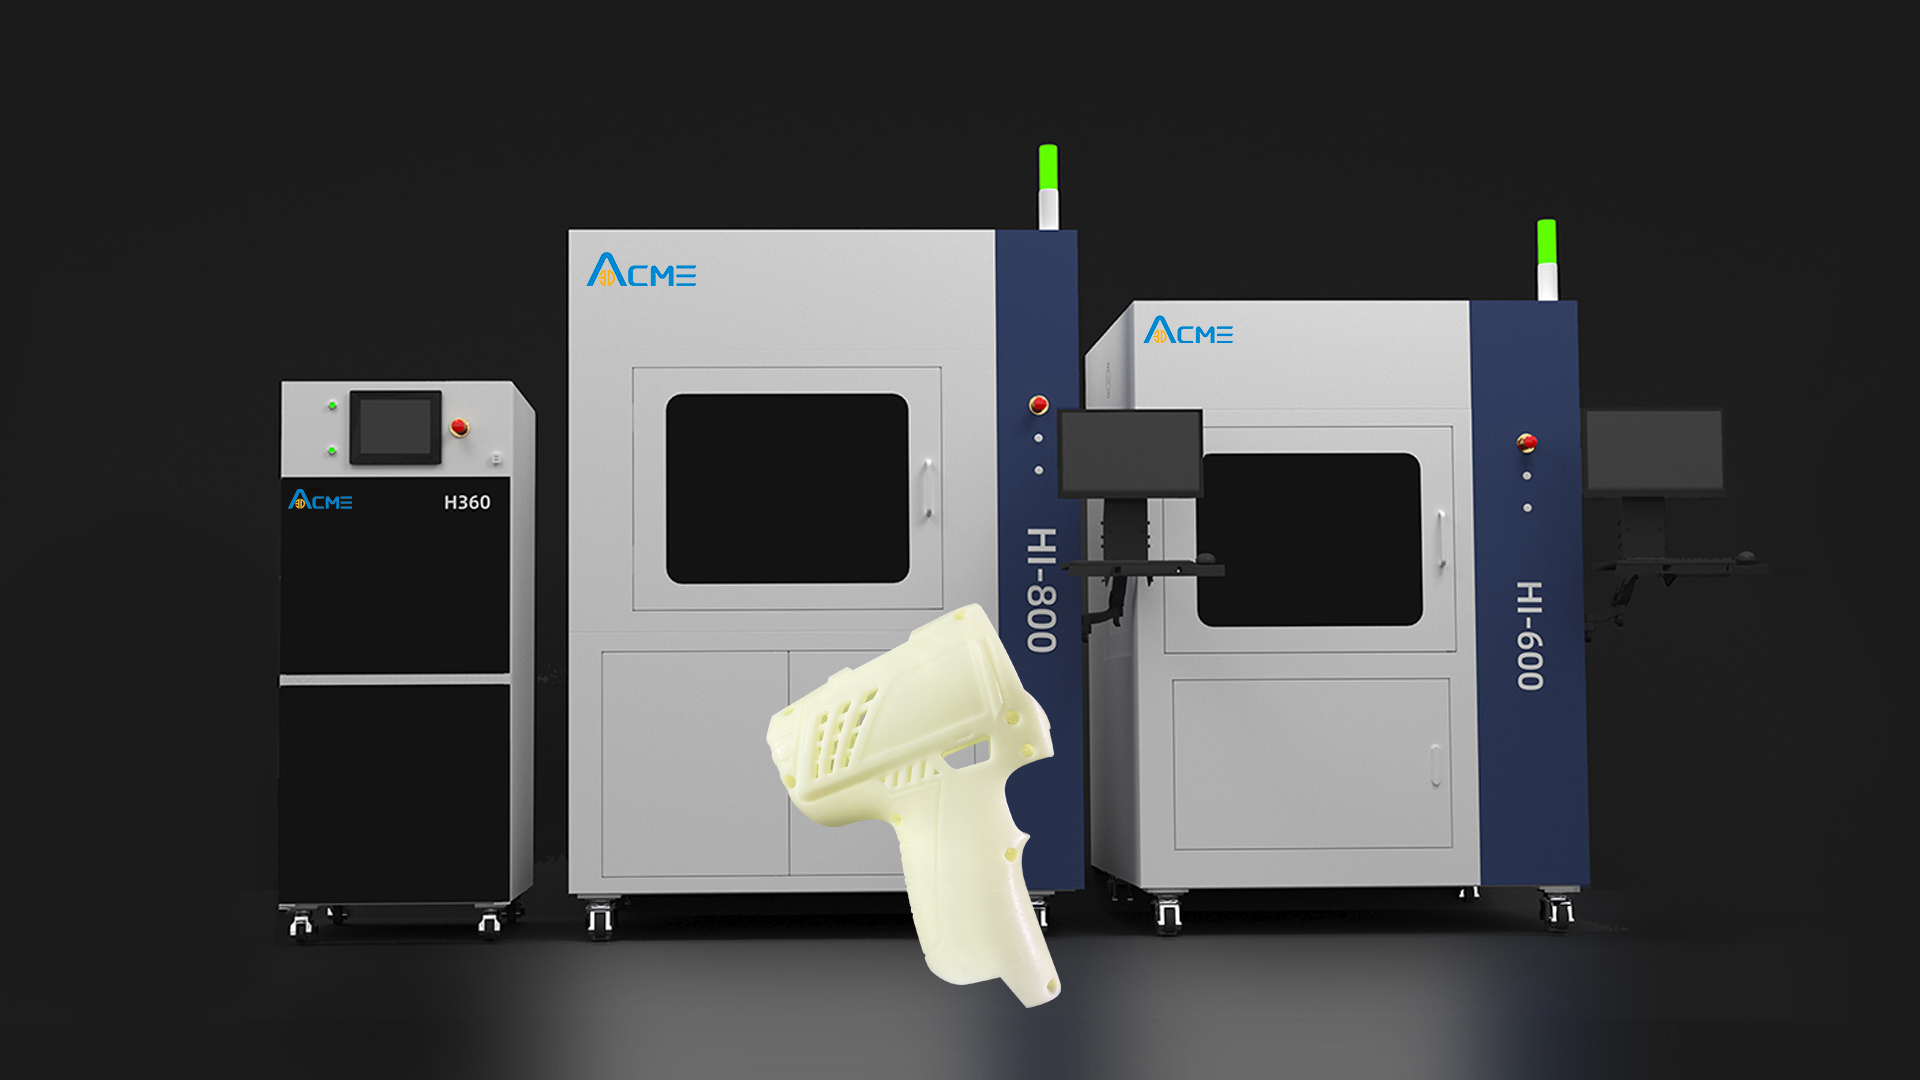 Hair dryer prototype 3D printer model printing, which brand of SLA industrial 3d printer is better?